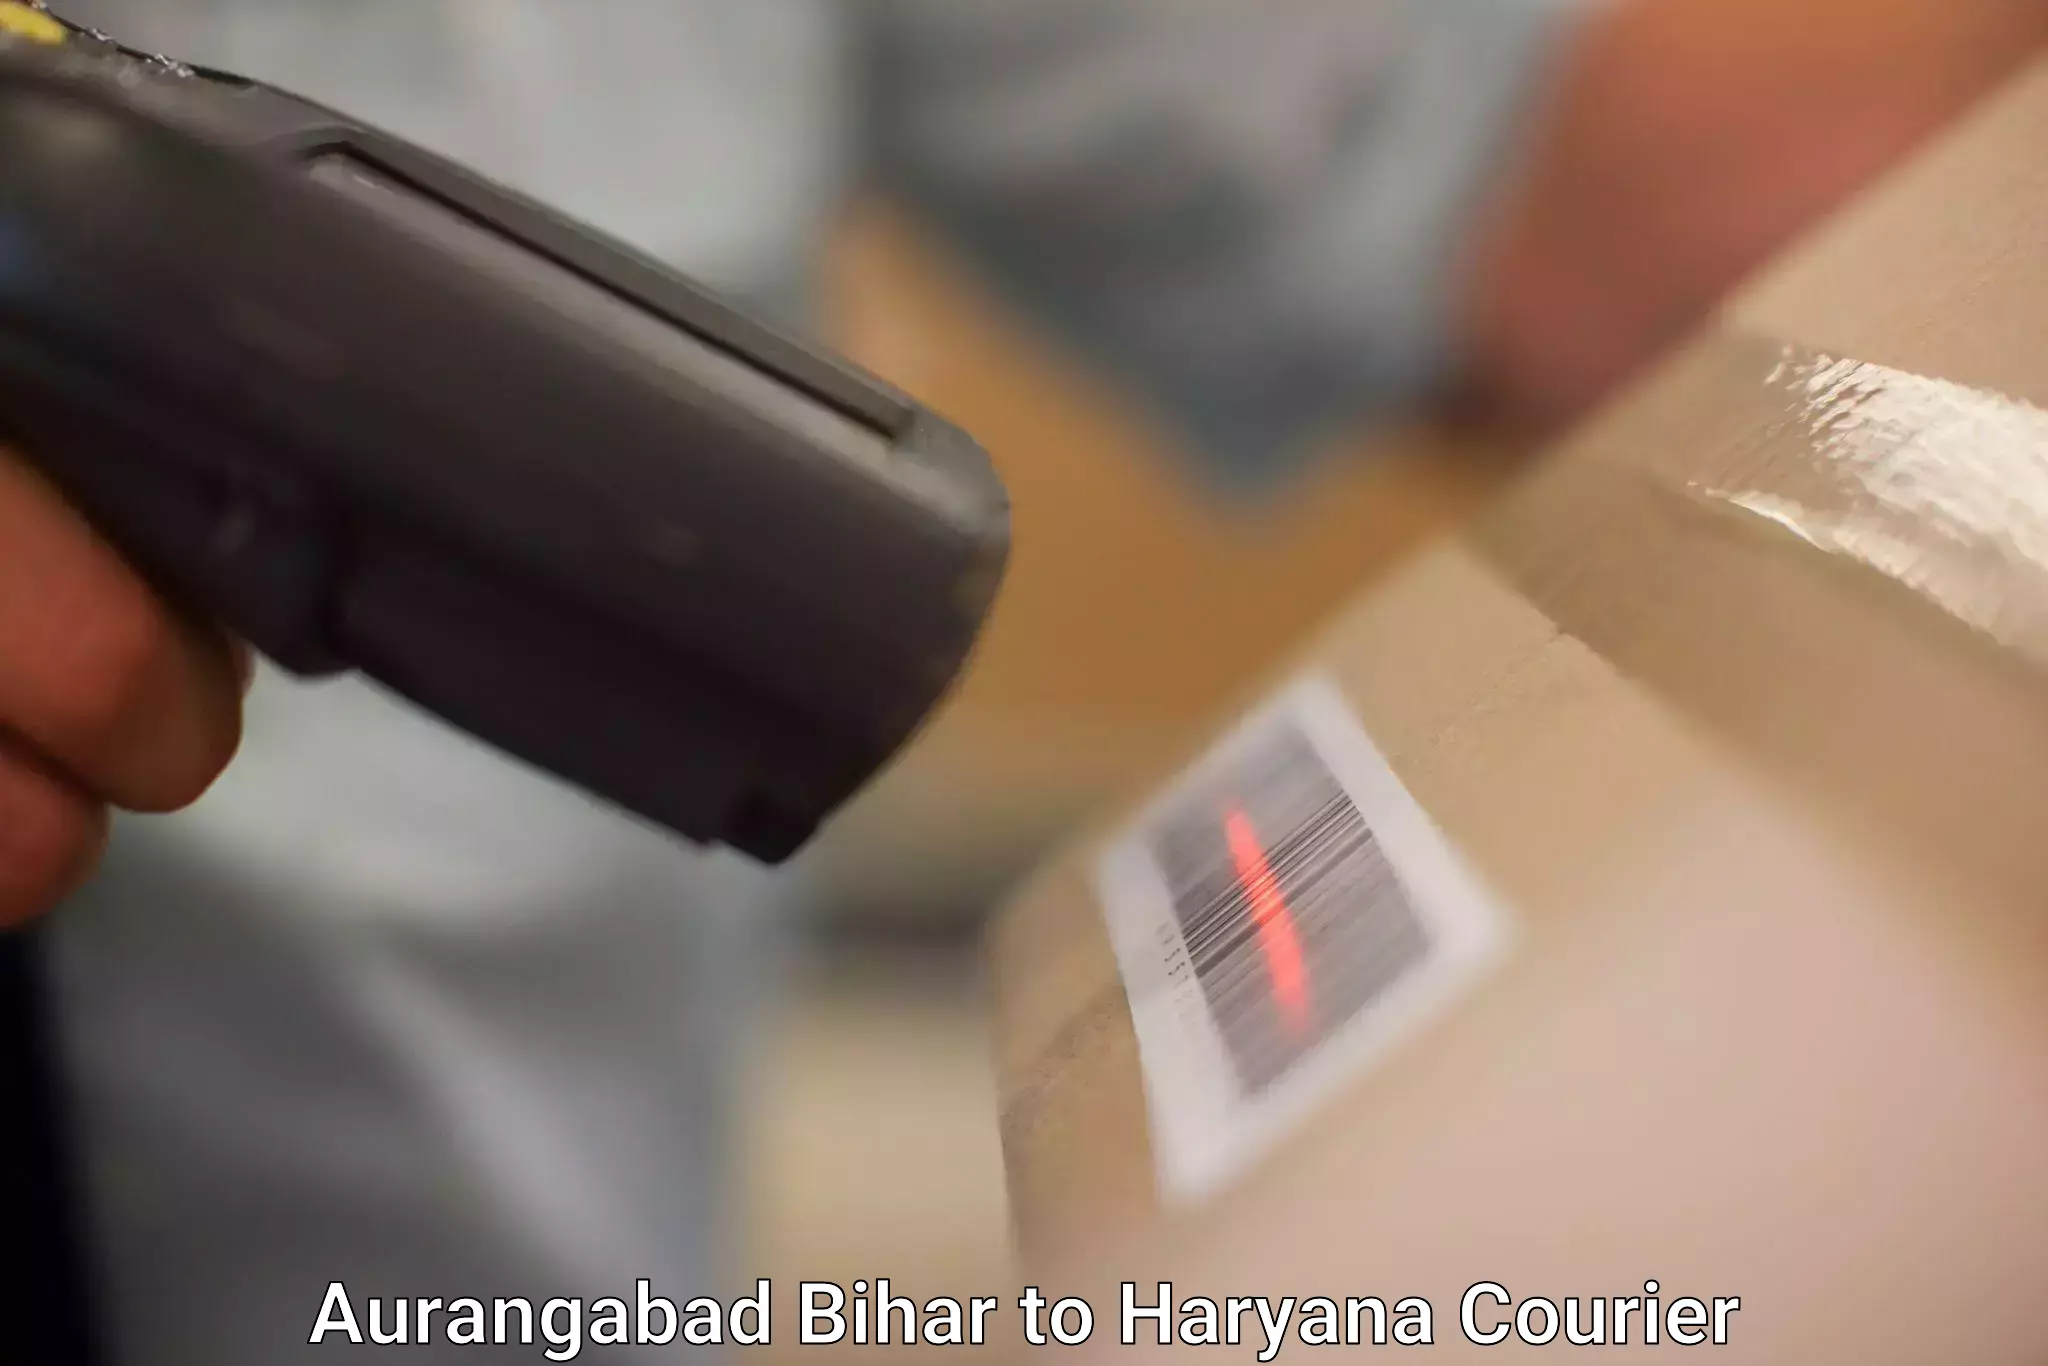 Package delivery network Aurangabad Bihar to Bilaspur Haryana